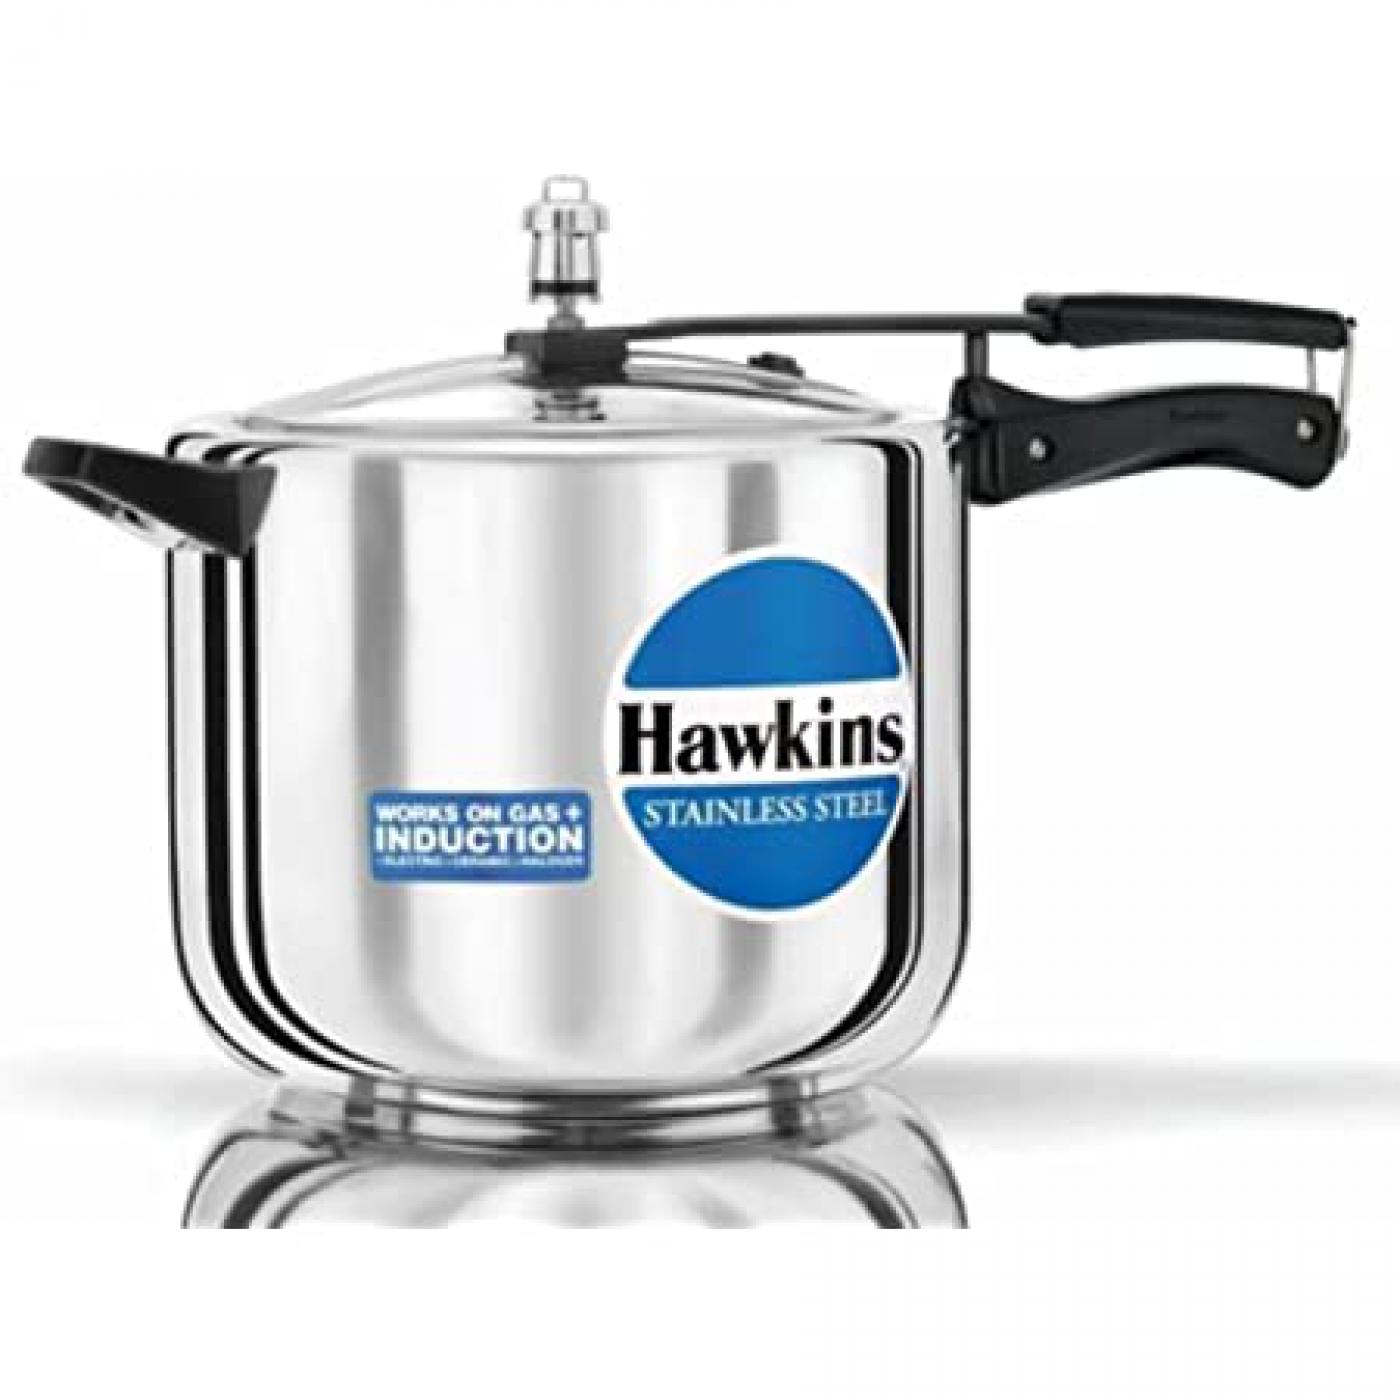 Hawkins Stainless Steel 10 Ltr